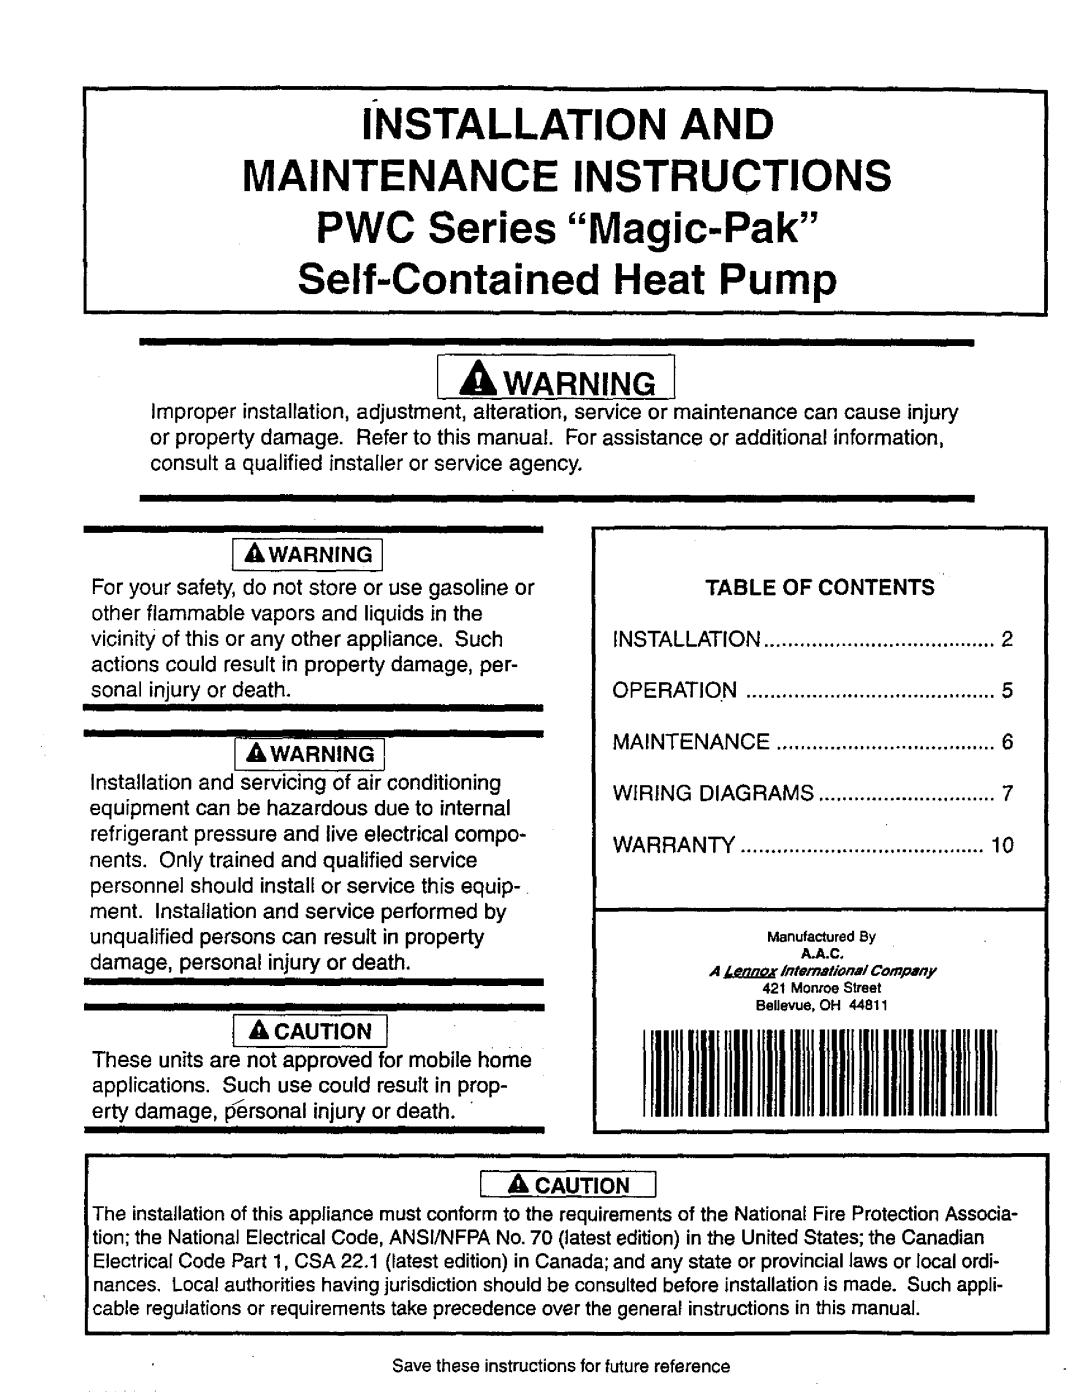 Lennox International Inc PWC302, PWC24E9.2 warranty A Caution, IIIIIIIIIIIIll, Installation And Maintenance Instructions 